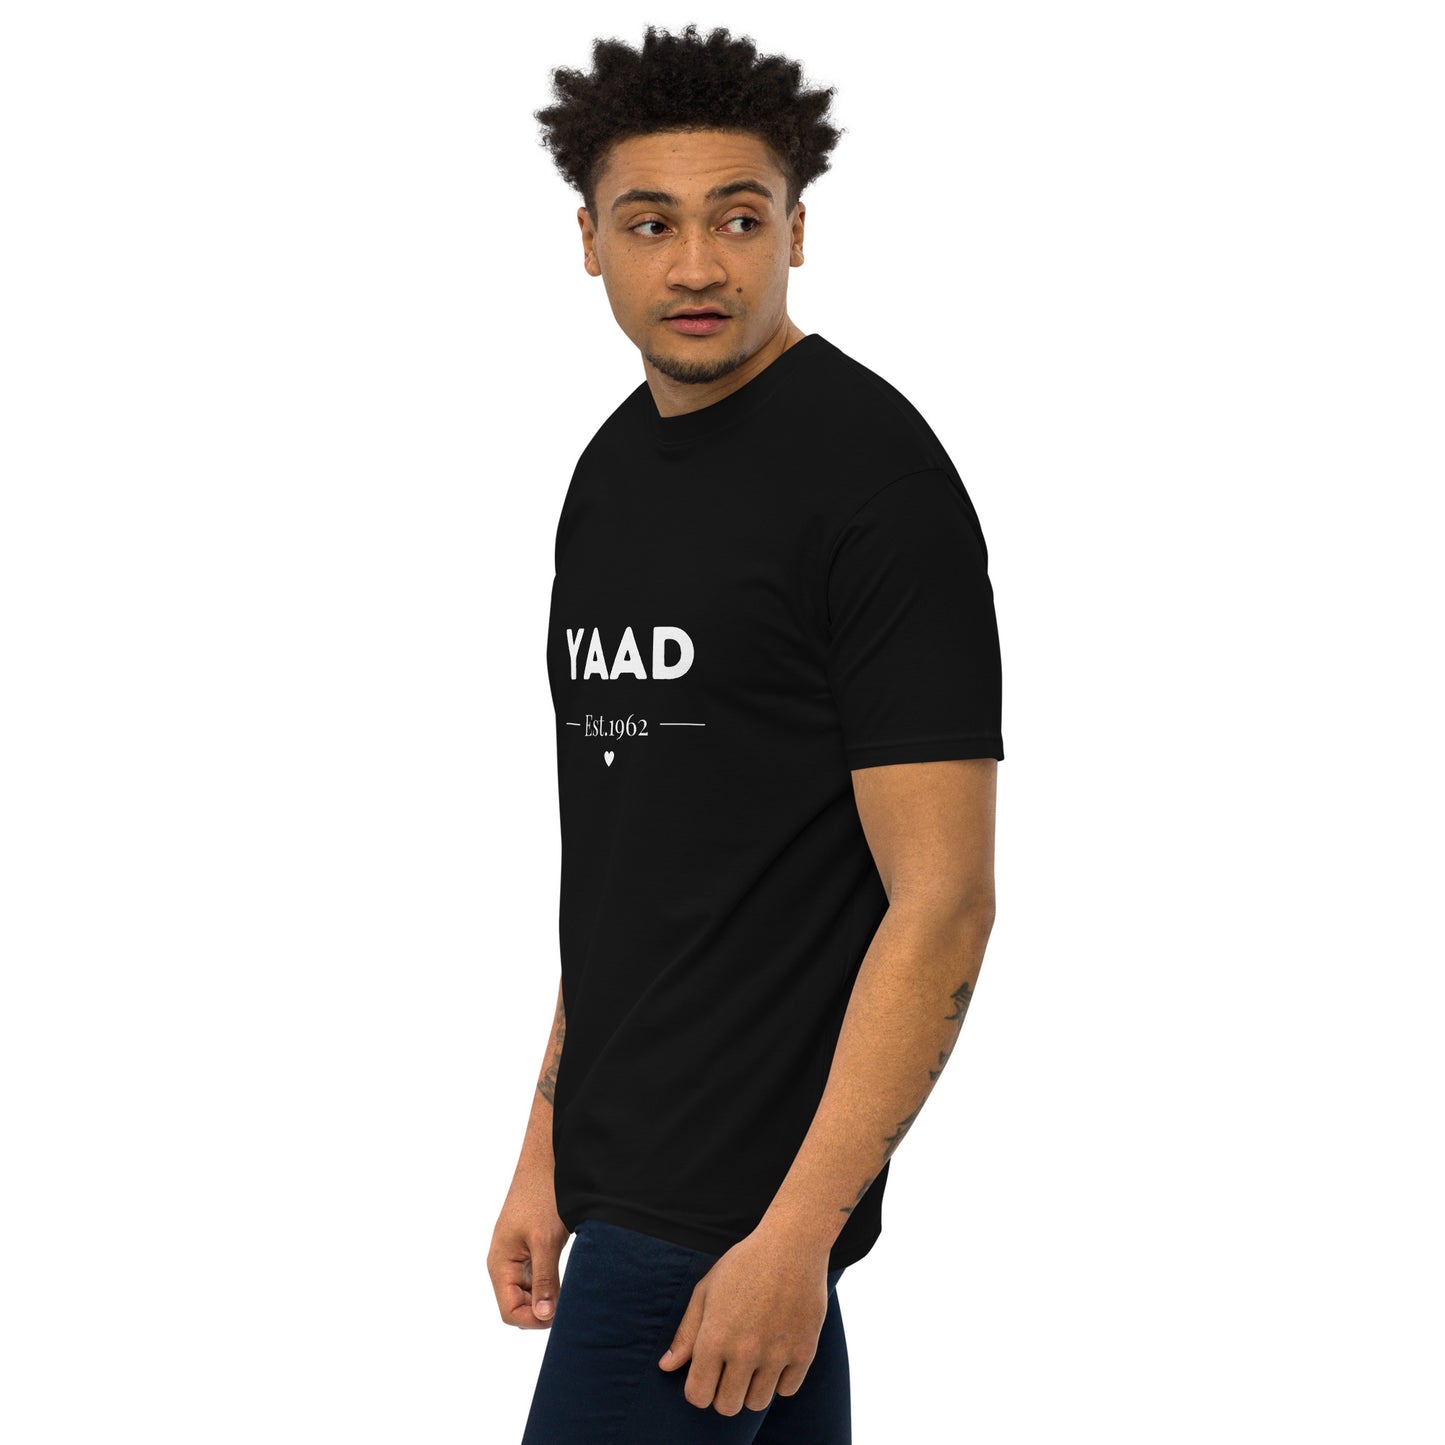 Yaad with Heart - Premium T-Shirt